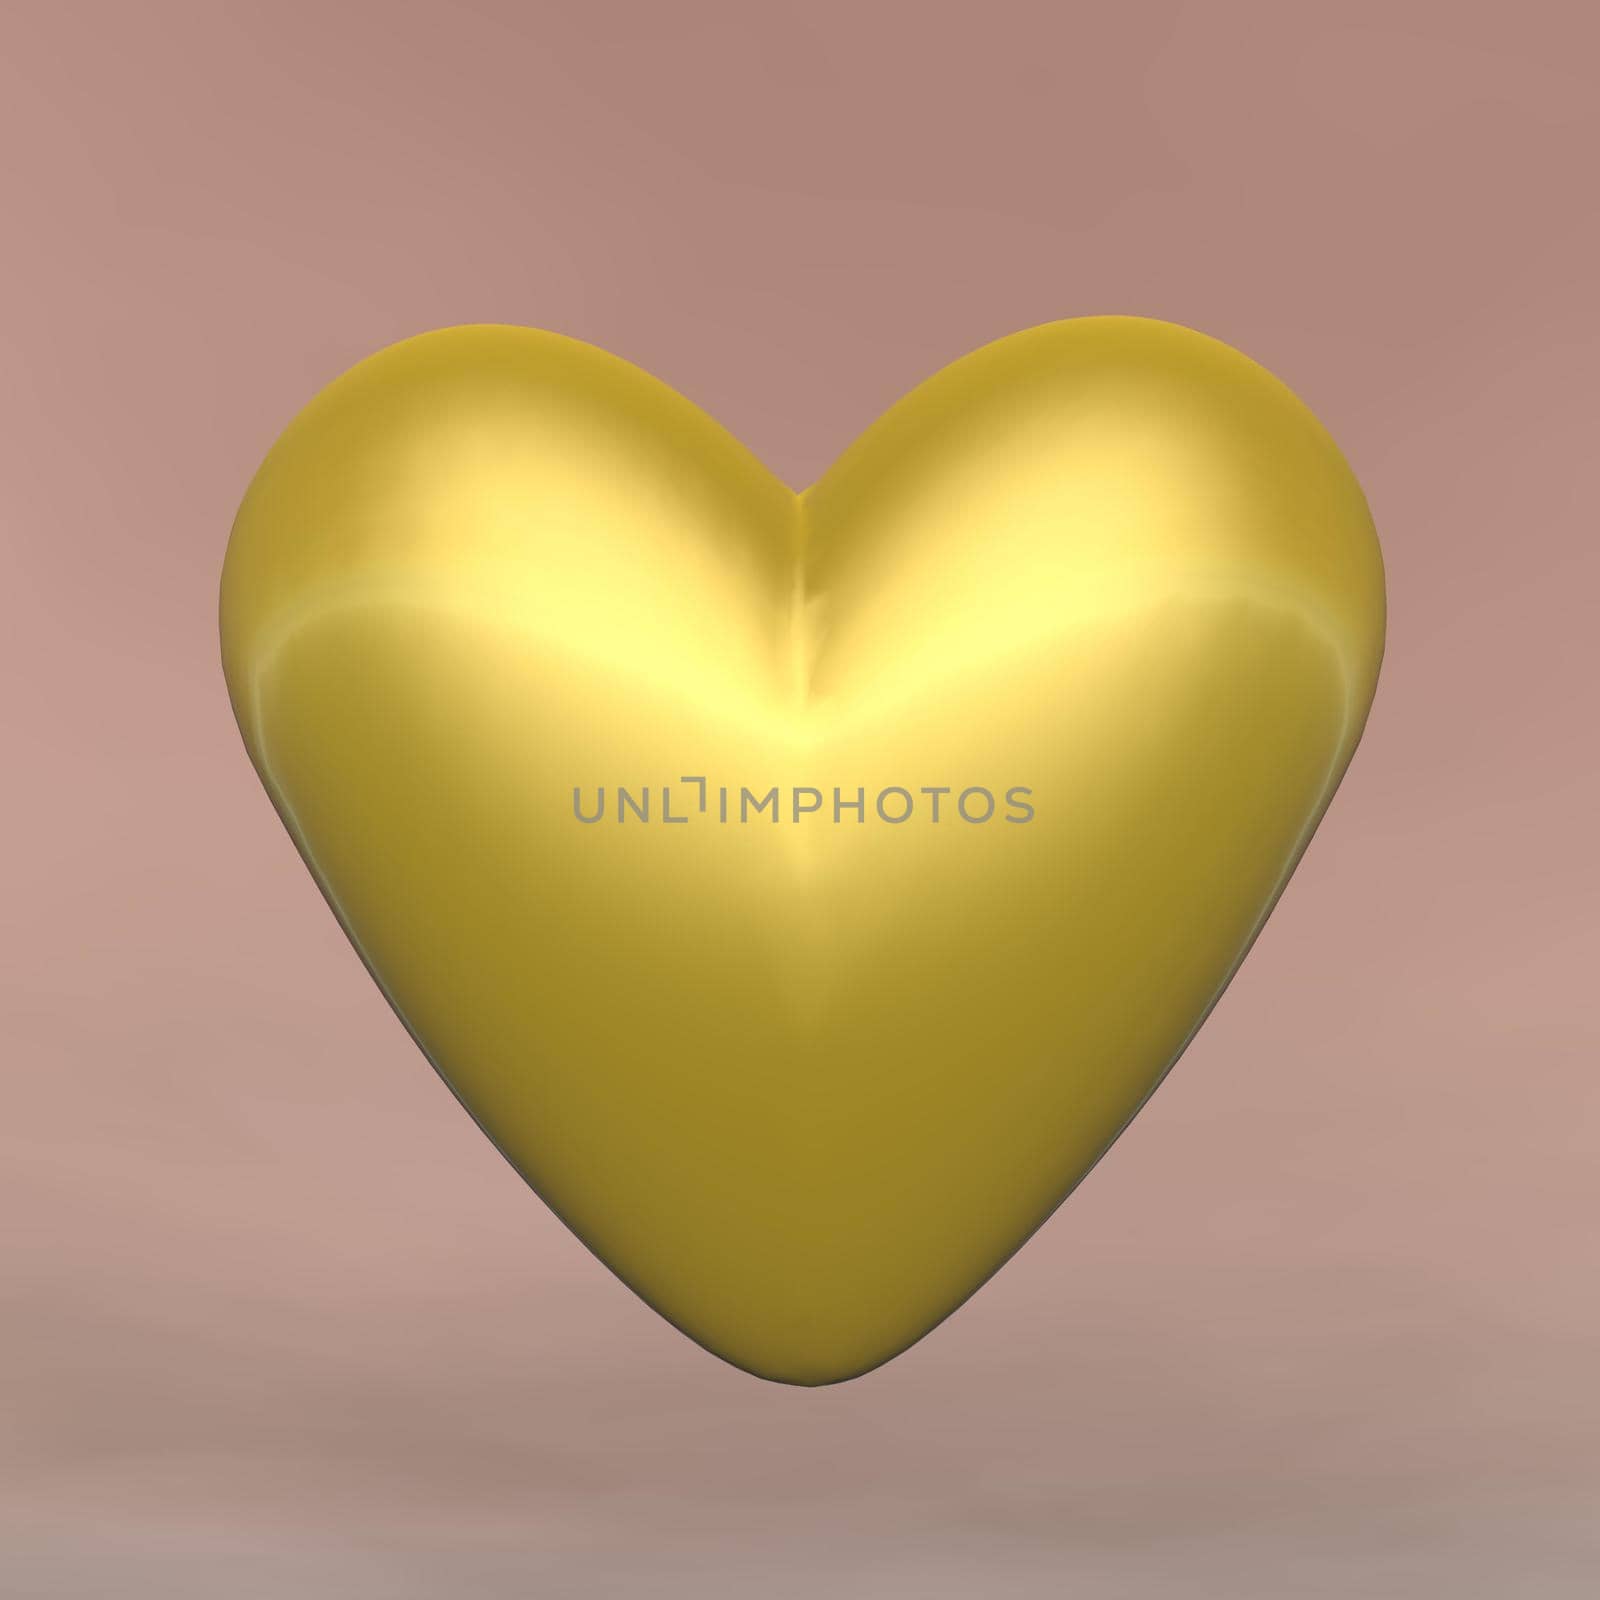 Big beautiful golden heart in brown background